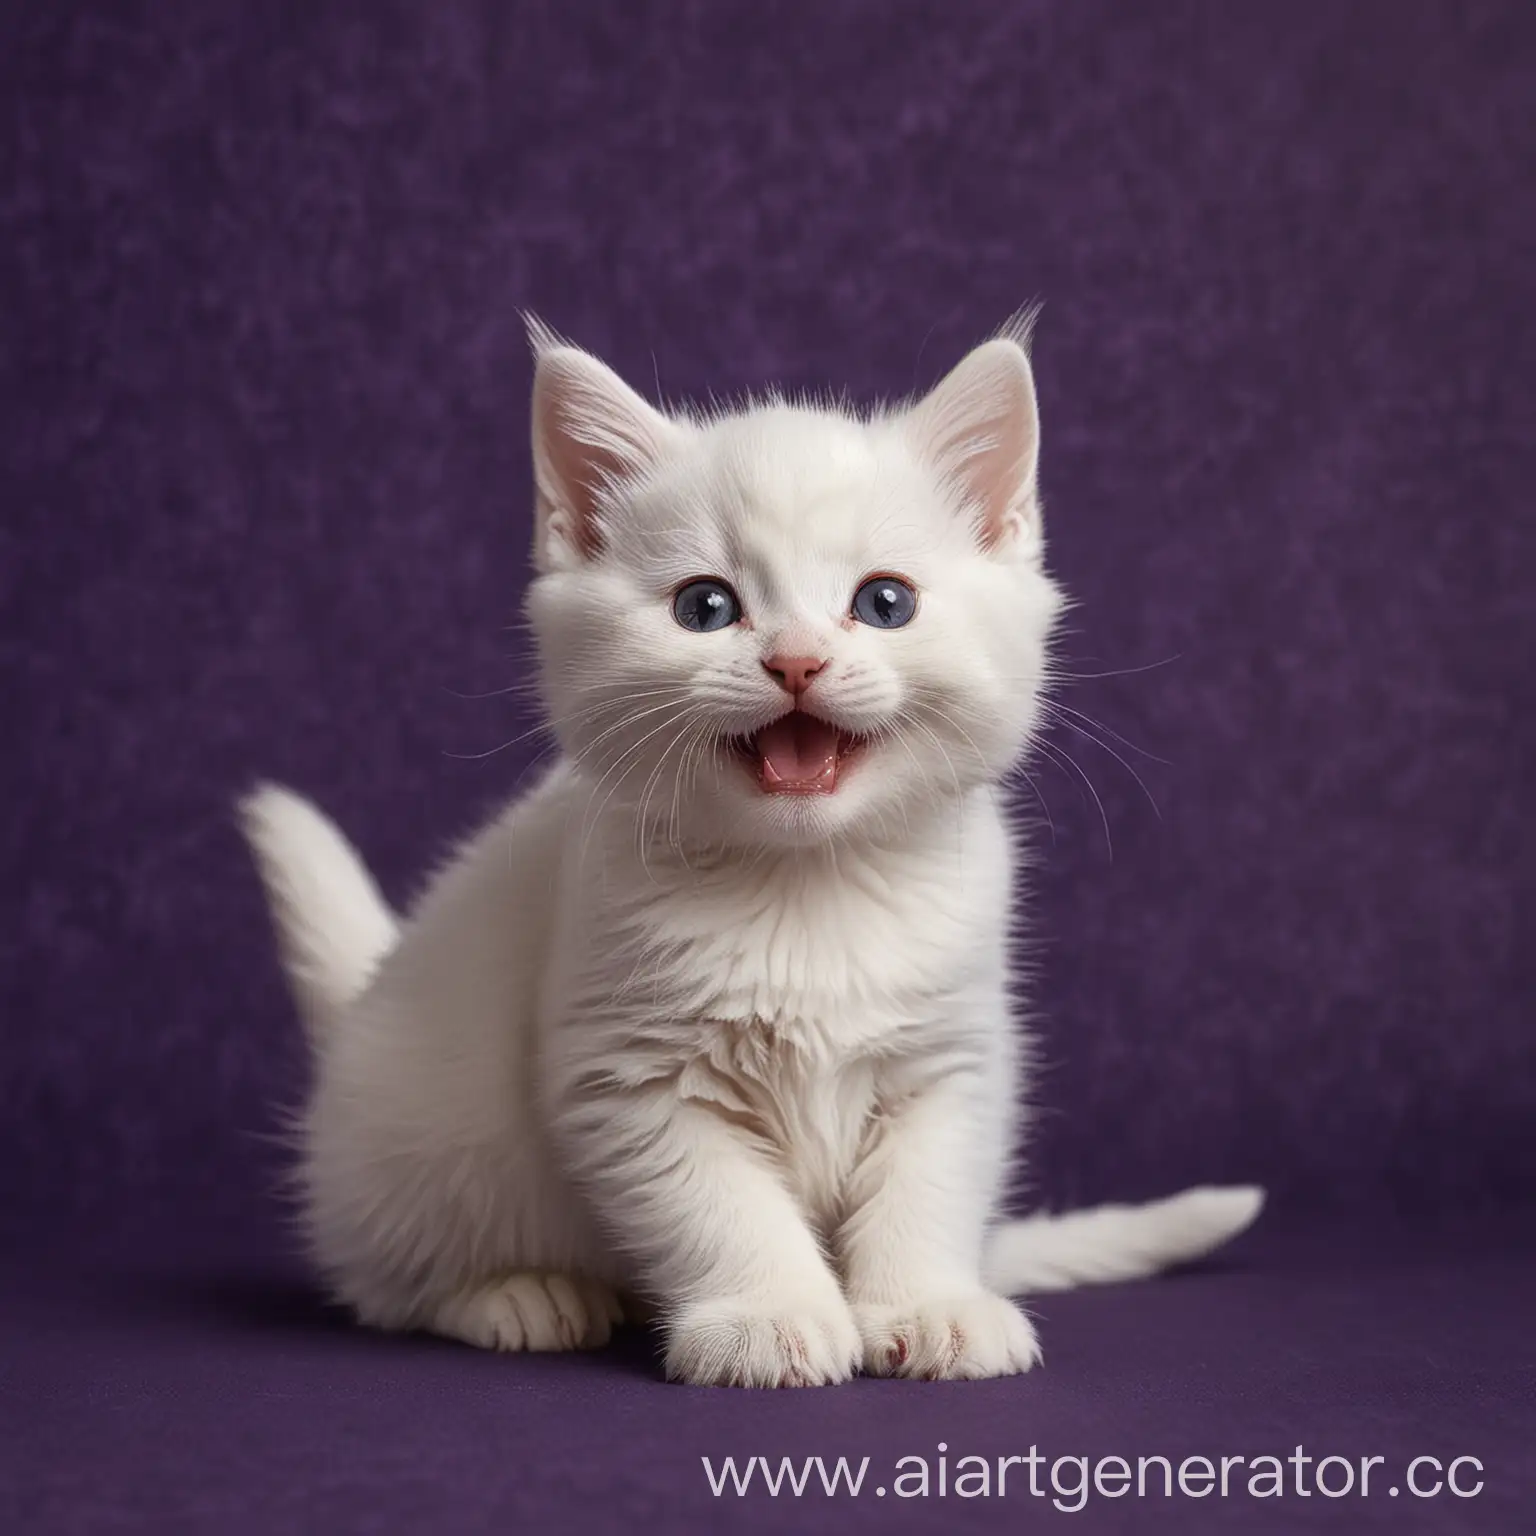 White-Kitten-Smiles-on-Dark-Purple-Background